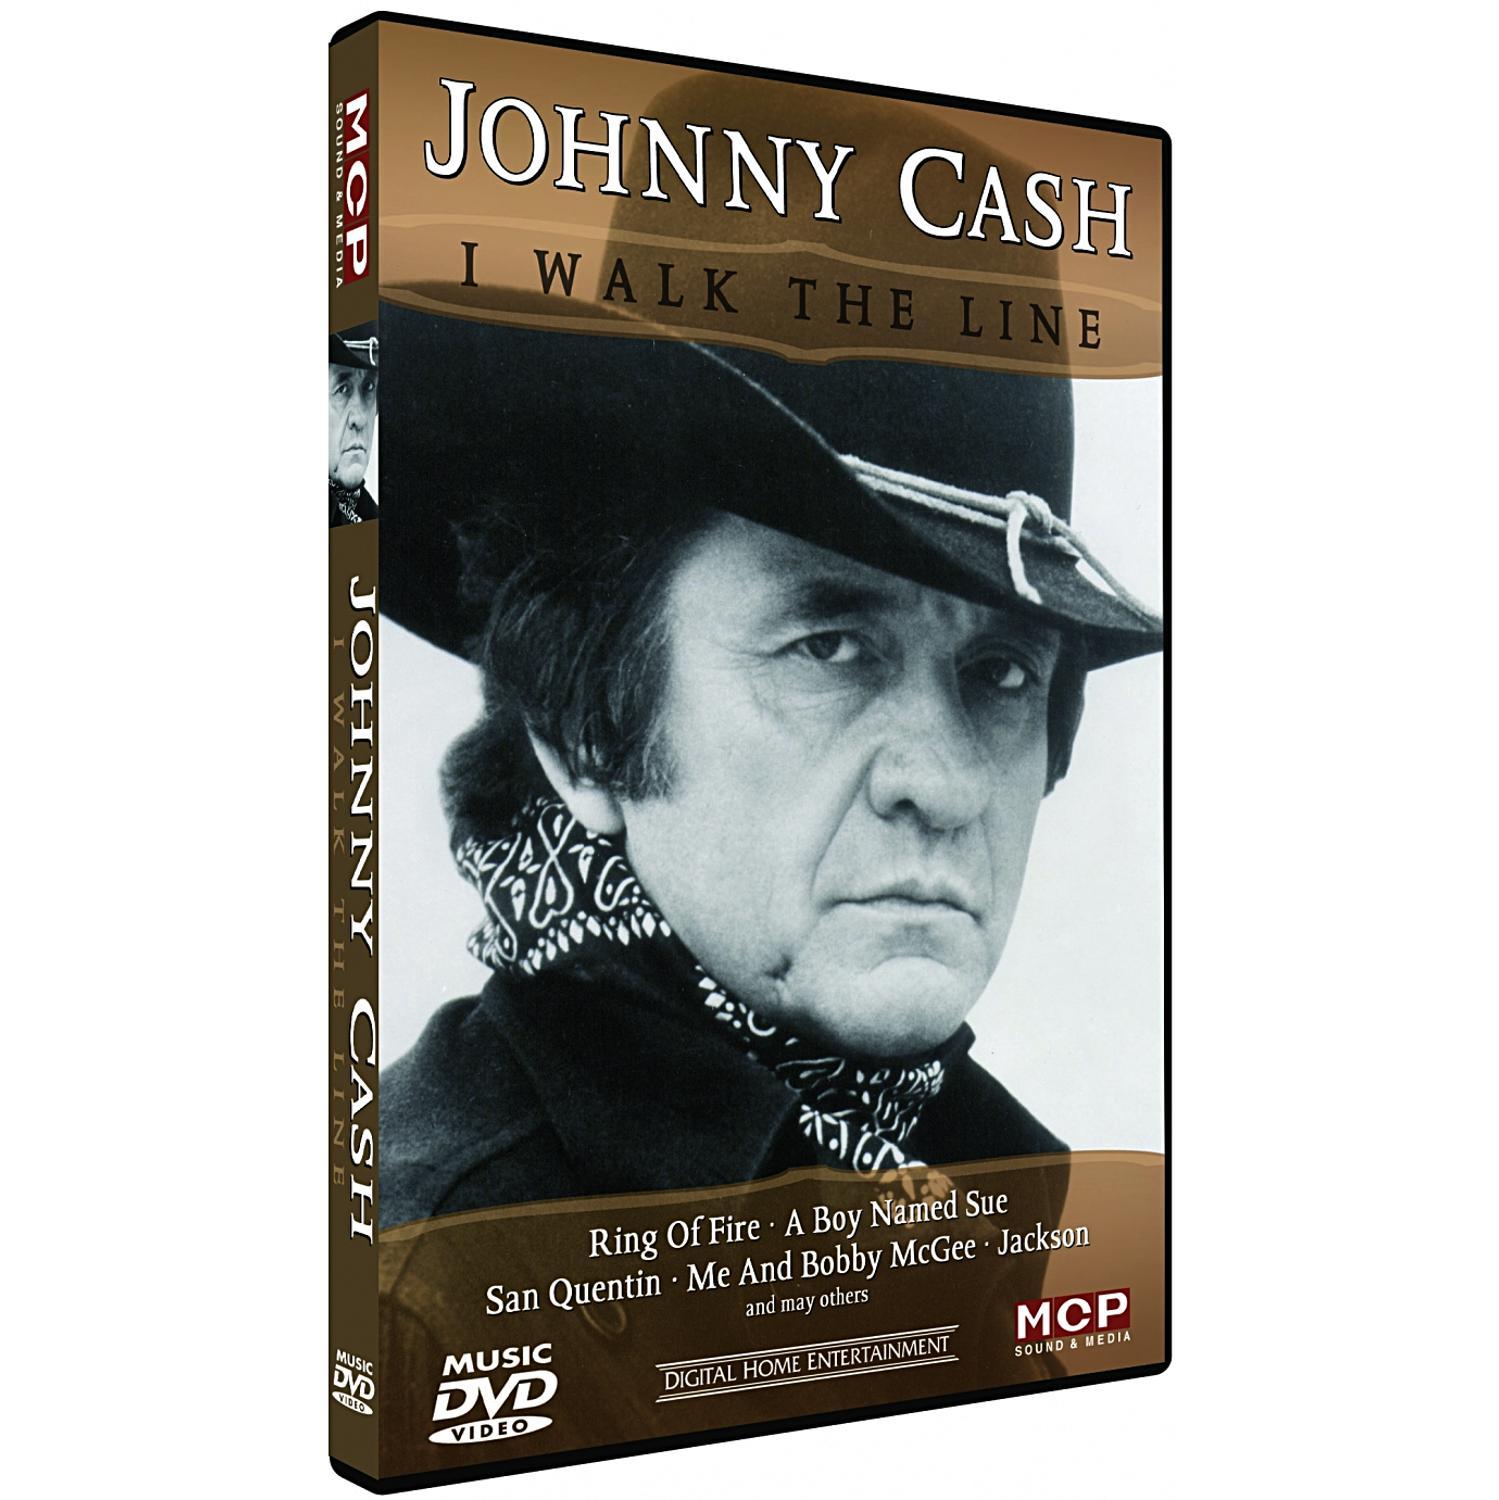 Line - Cash The Walk (DVD) - Johnny I